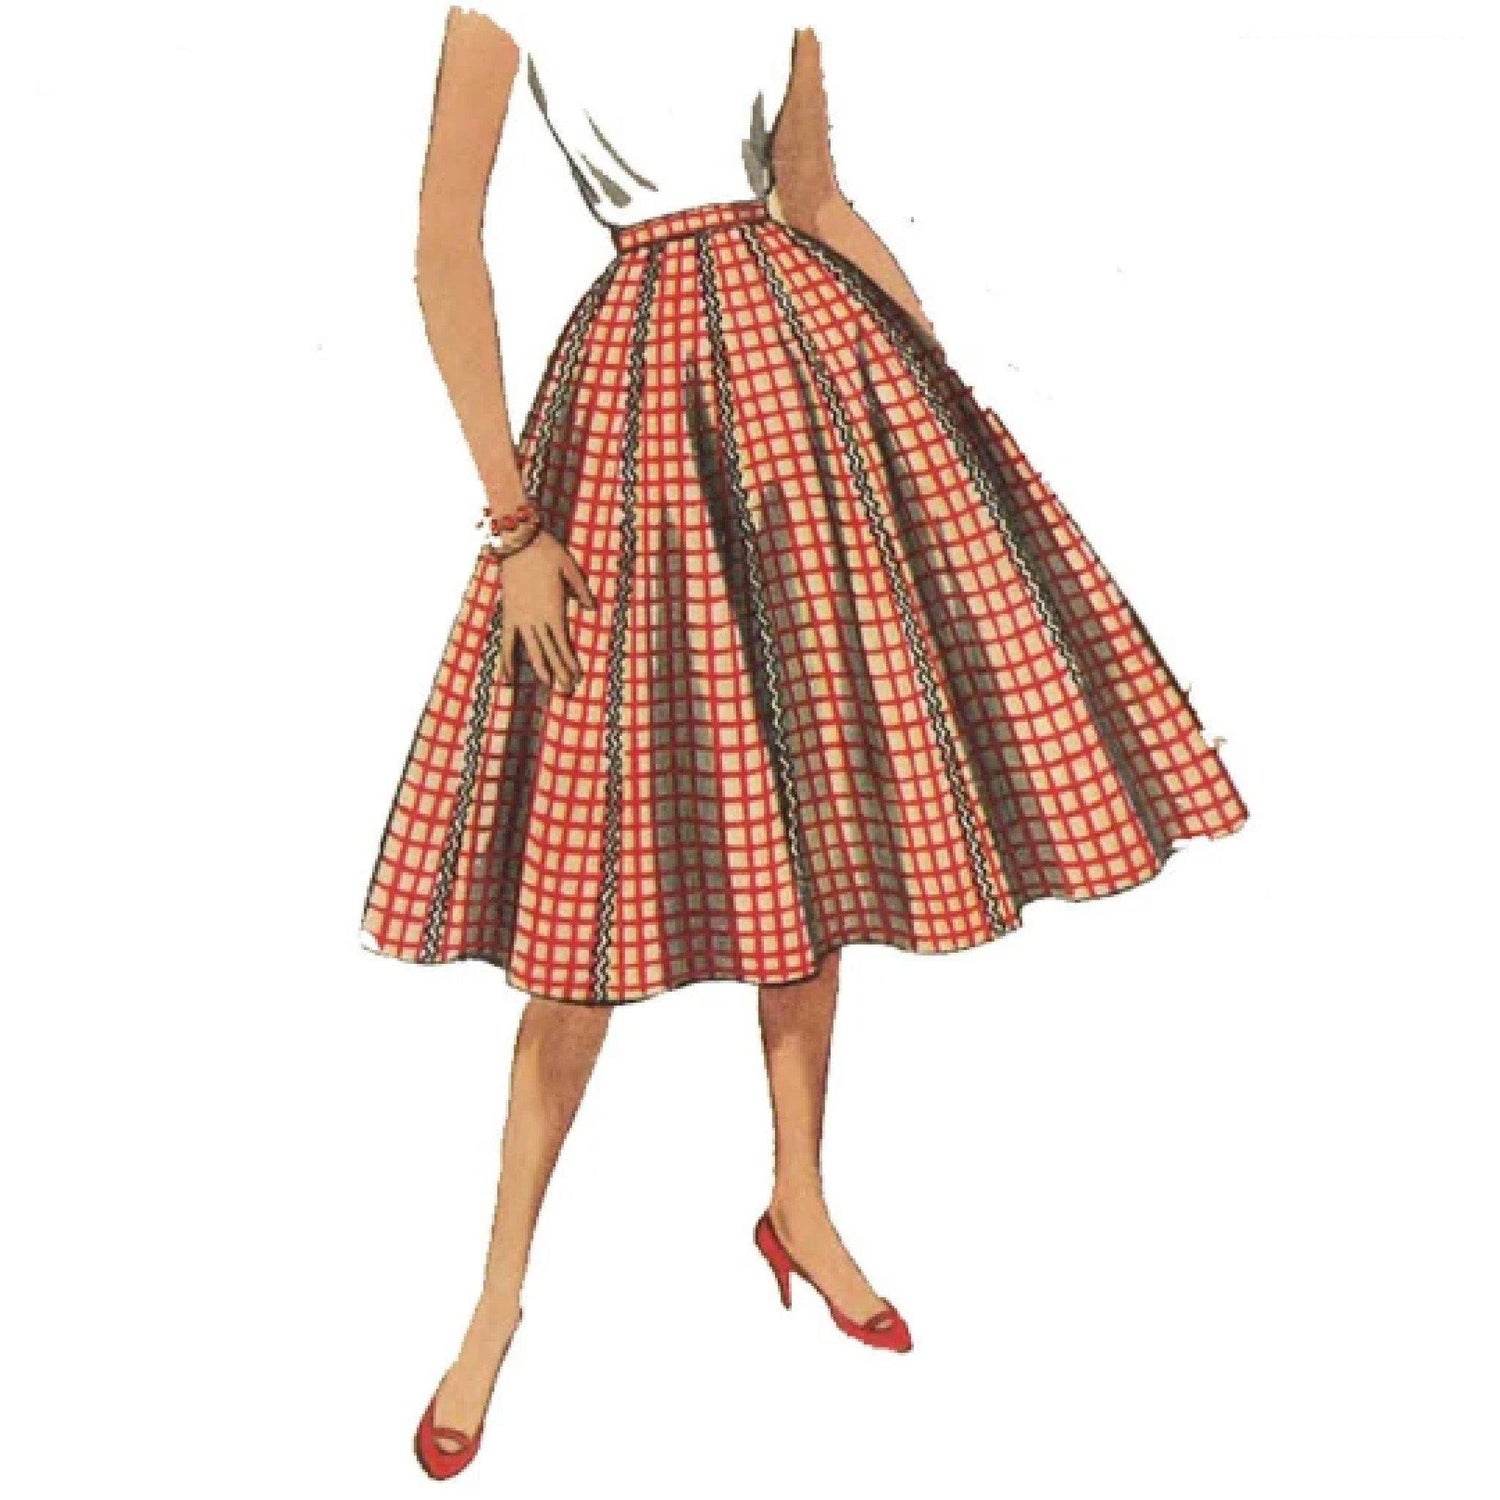 Models wearing skirt made using pattern Simplicity 1087 26 pattern.